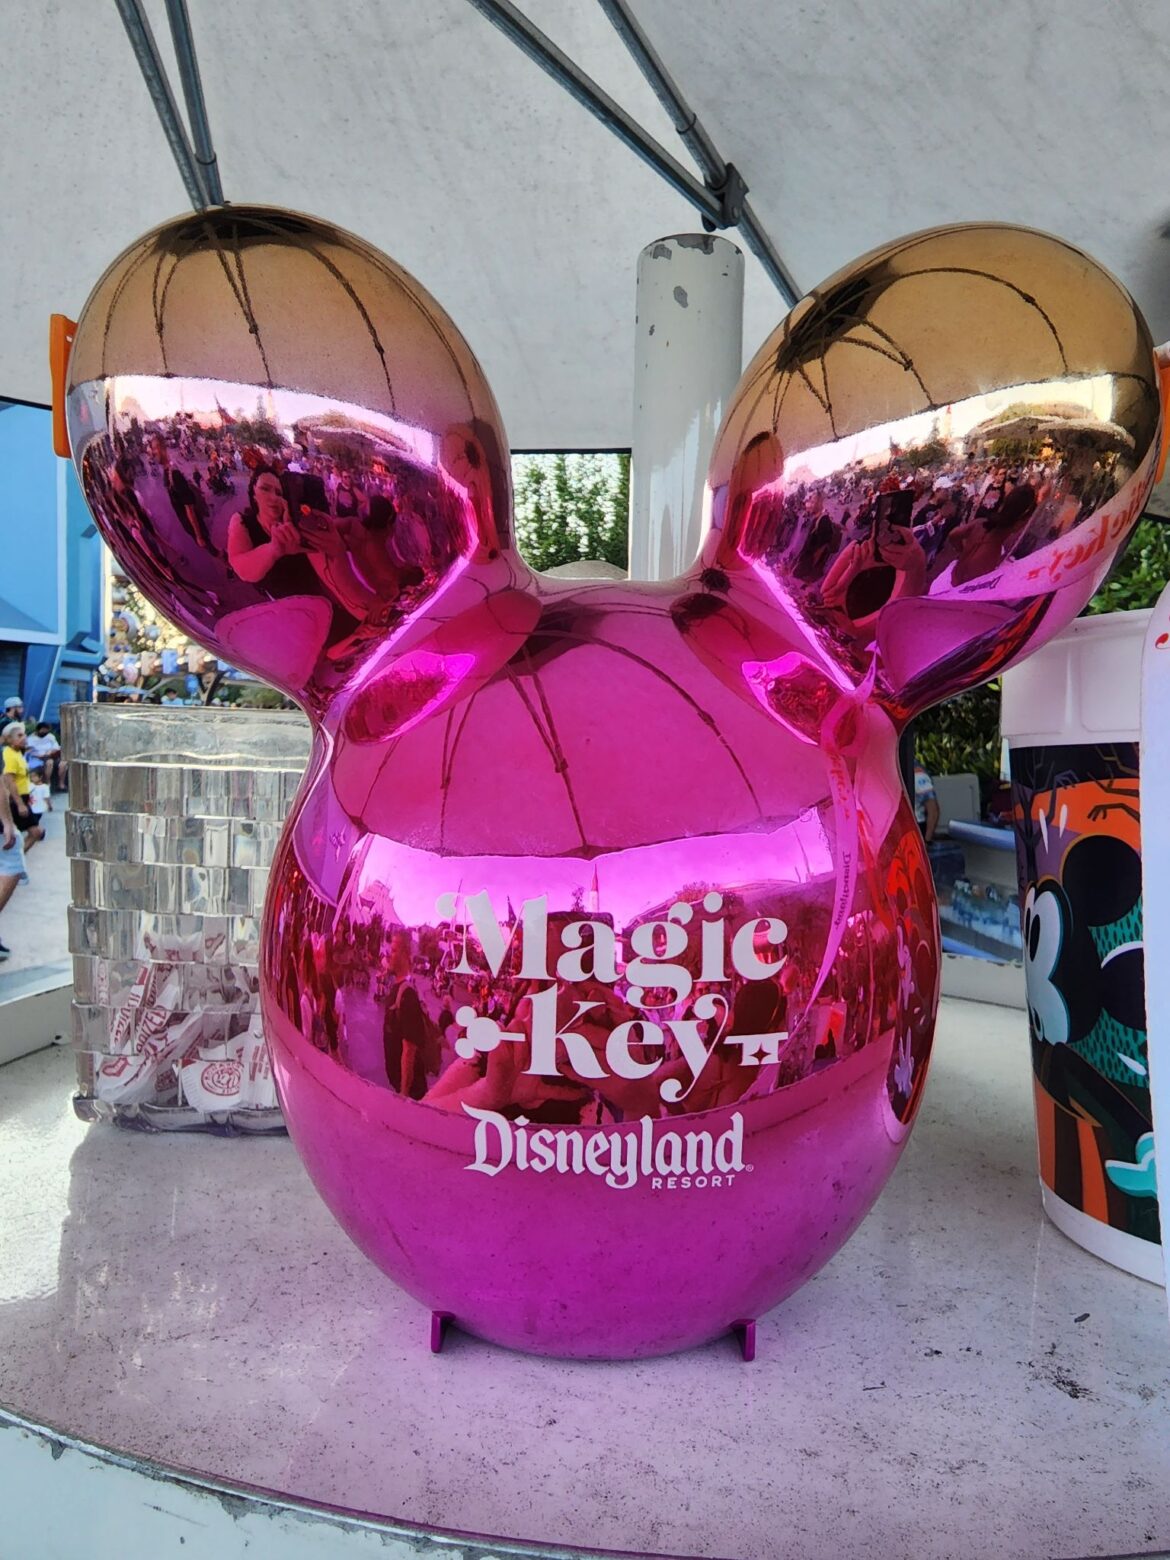 New Disneyland Magic Key Mickey Balloon Popcorn Bucket